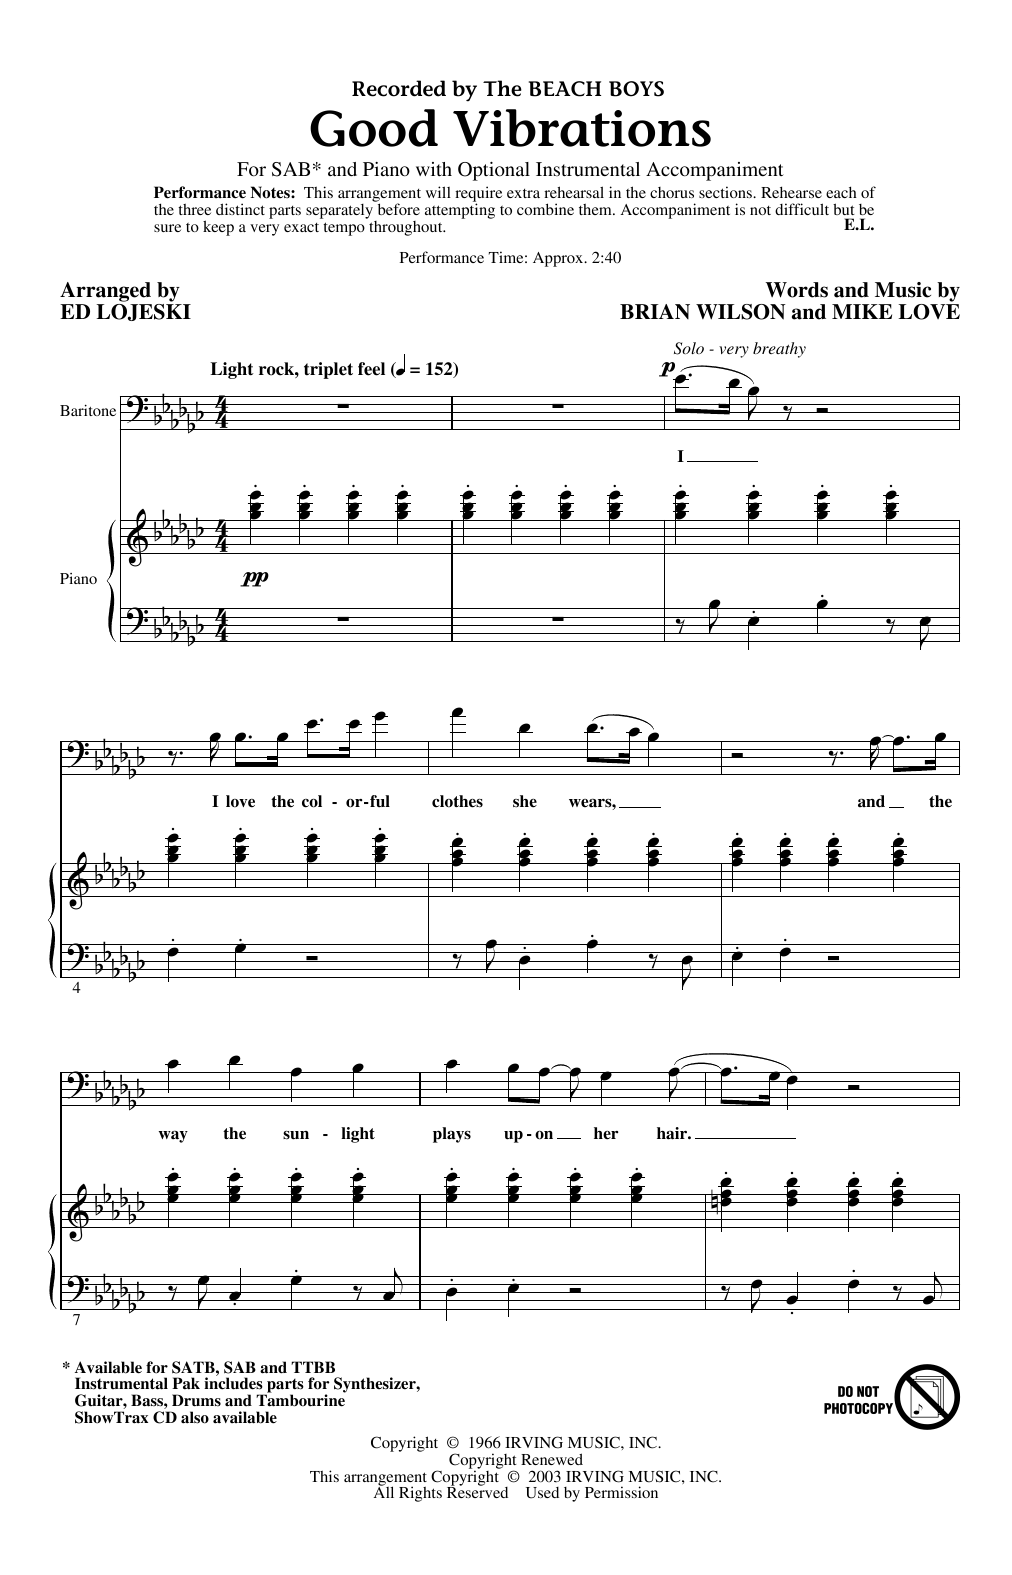 The Beach Boys Good Vibrations (arr. Ed Lojeski) Sheet Music Notes & Chords for SATB Choir - Download or Print PDF